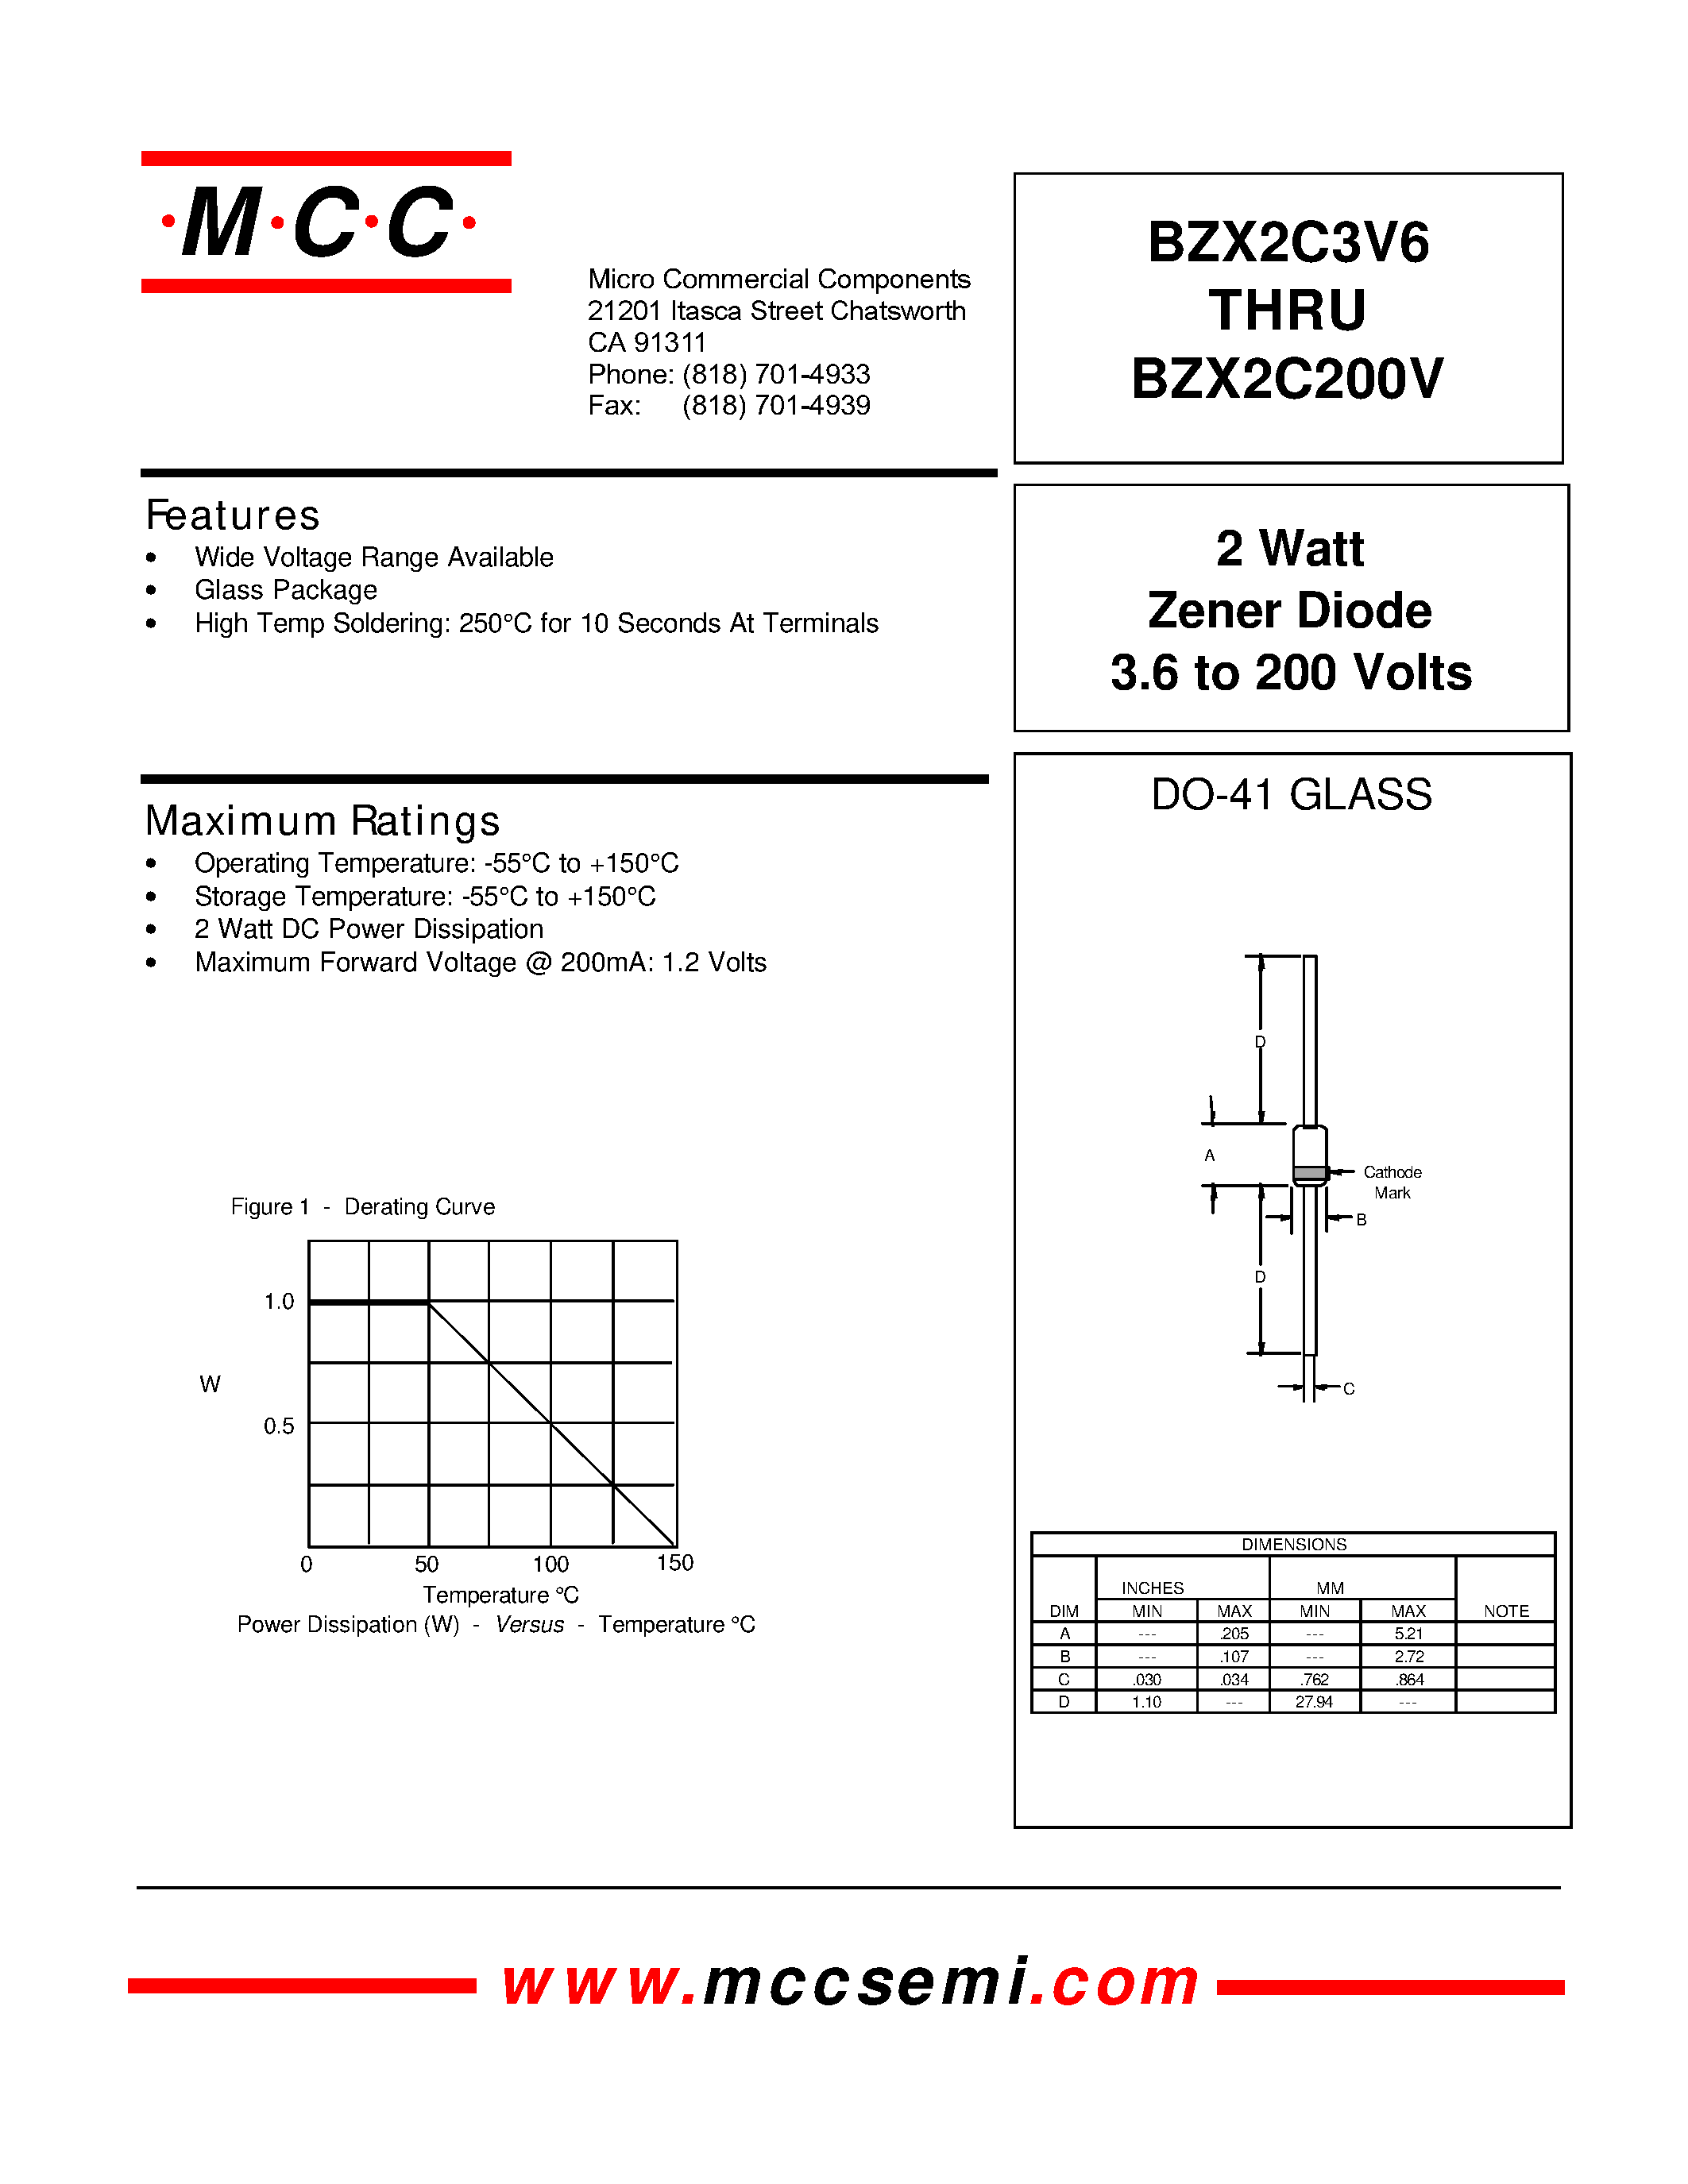 Datasheet BZX2C9V1 - 2 Watt Zener Diode 3.6 to 200 Volts page 1